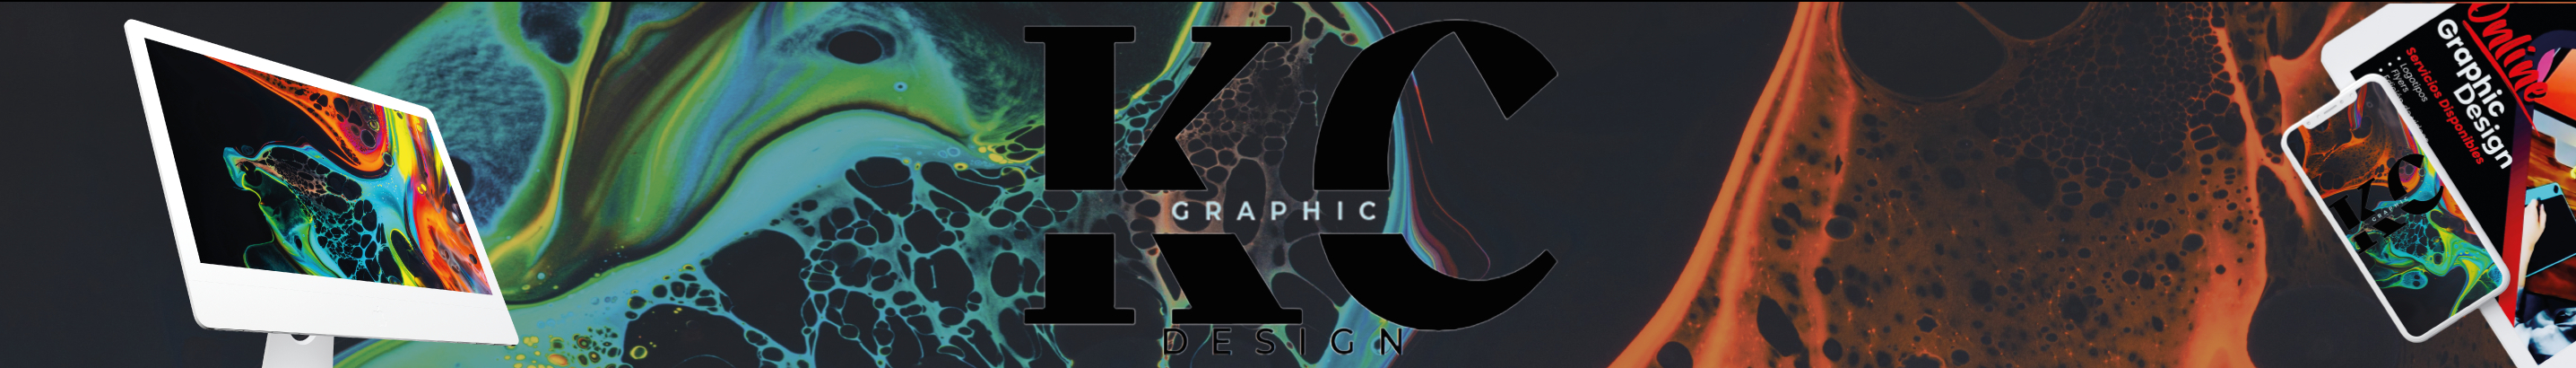 KC Graphic Design's profile banner